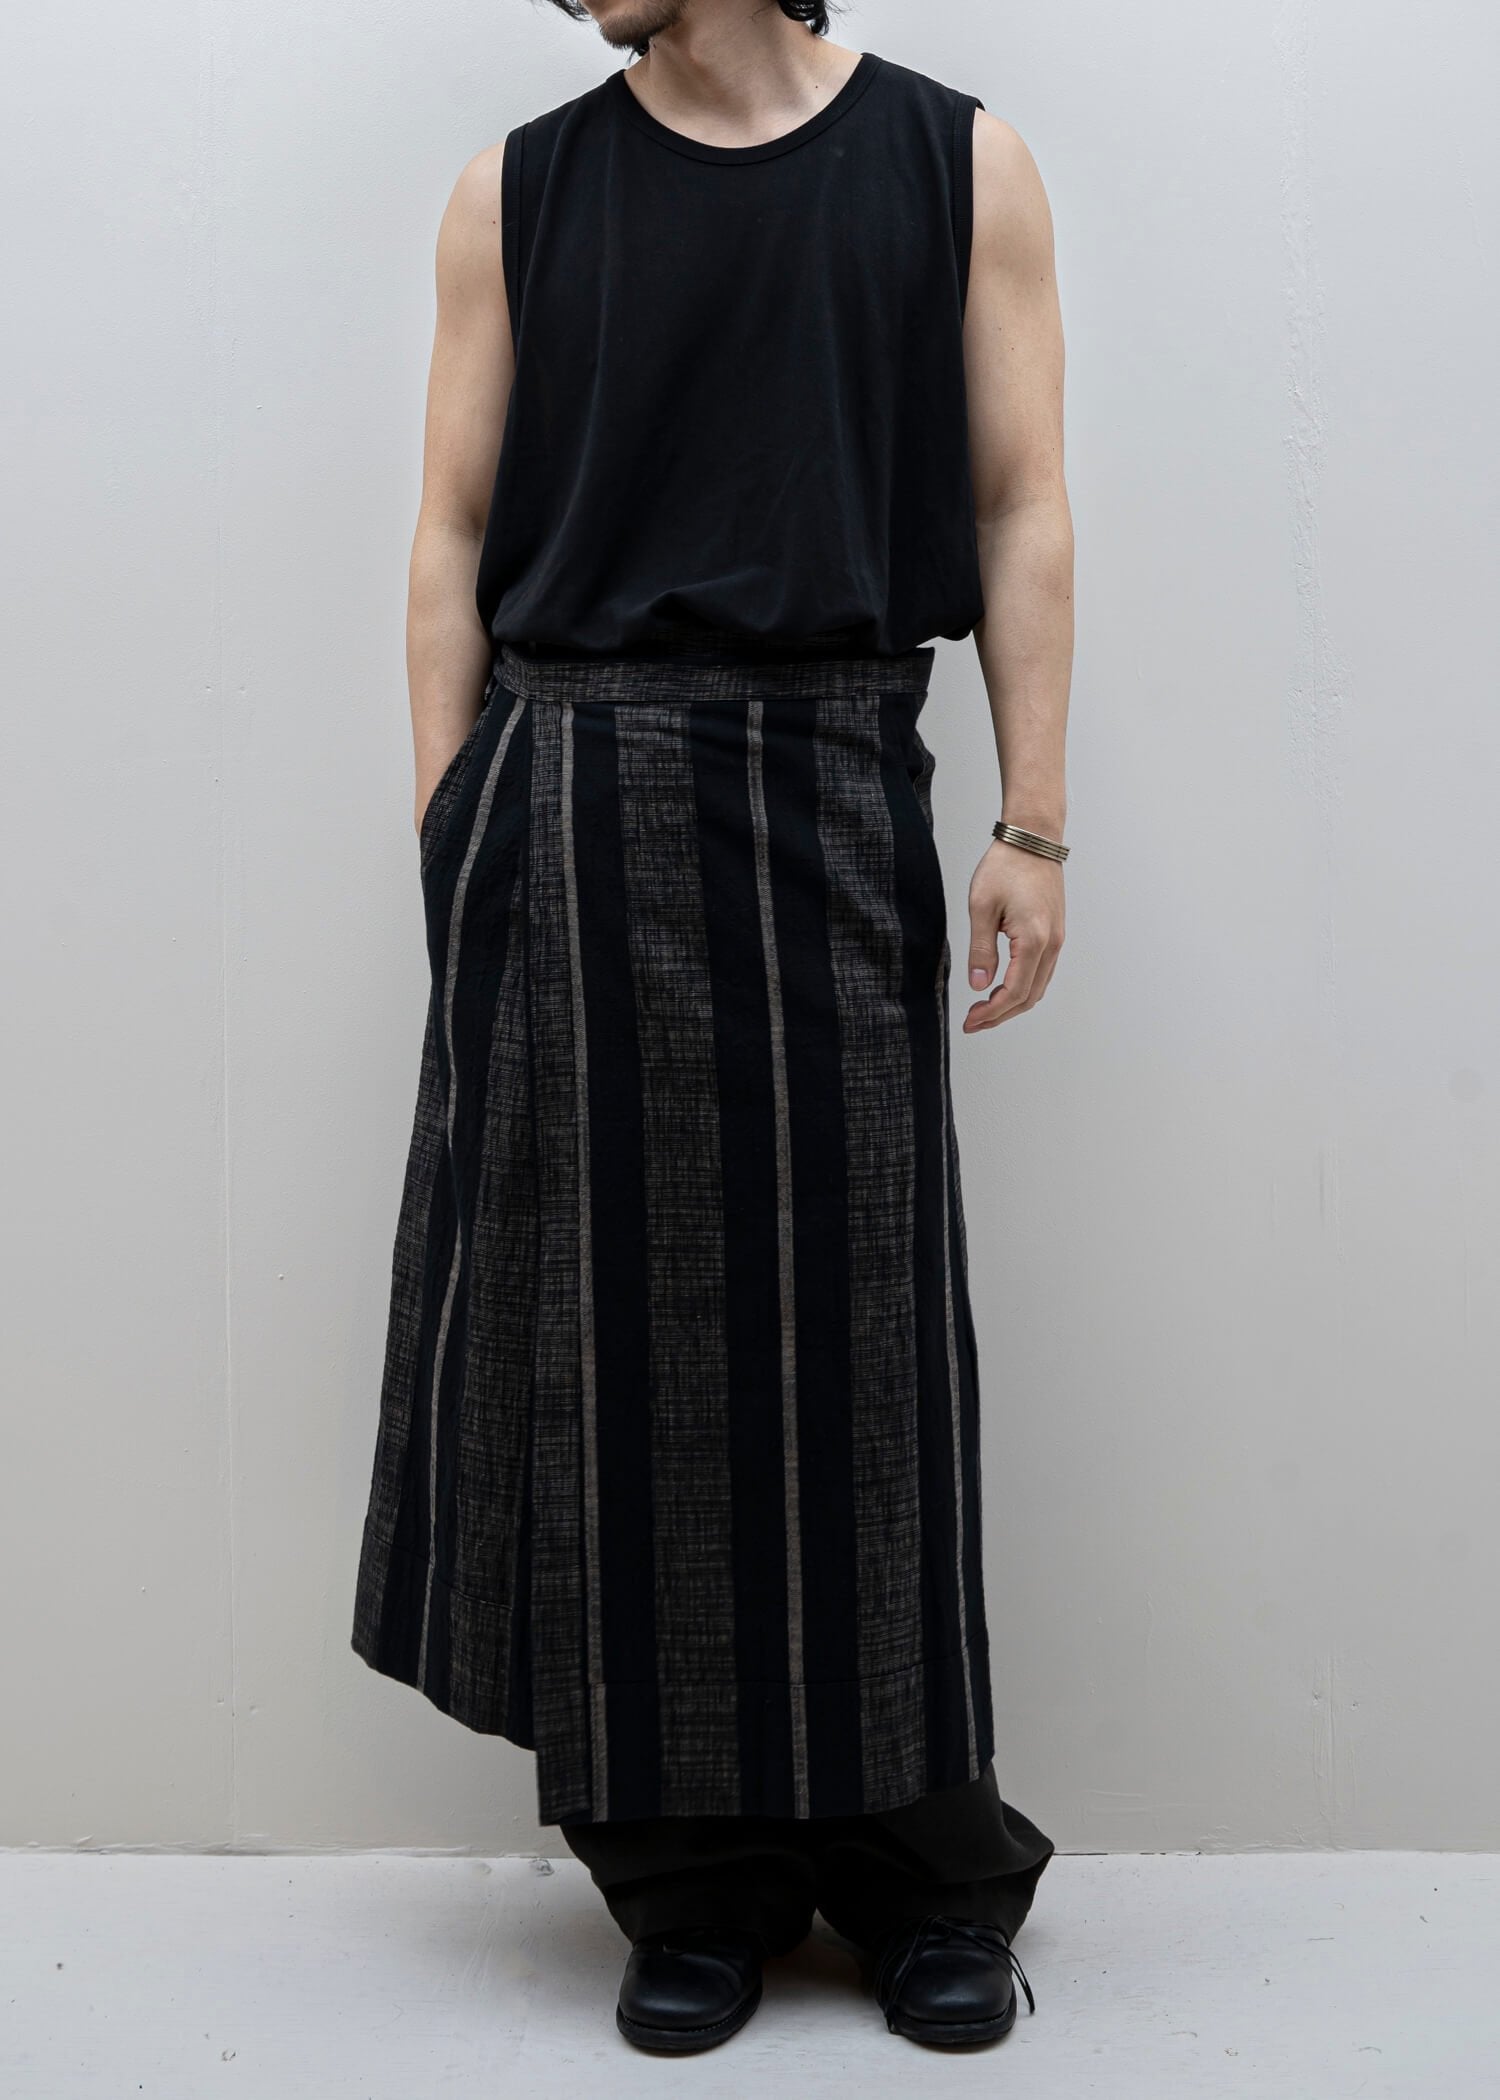 JAN-JAN VAN ESSCHE /“围裙#4”粗条纹布